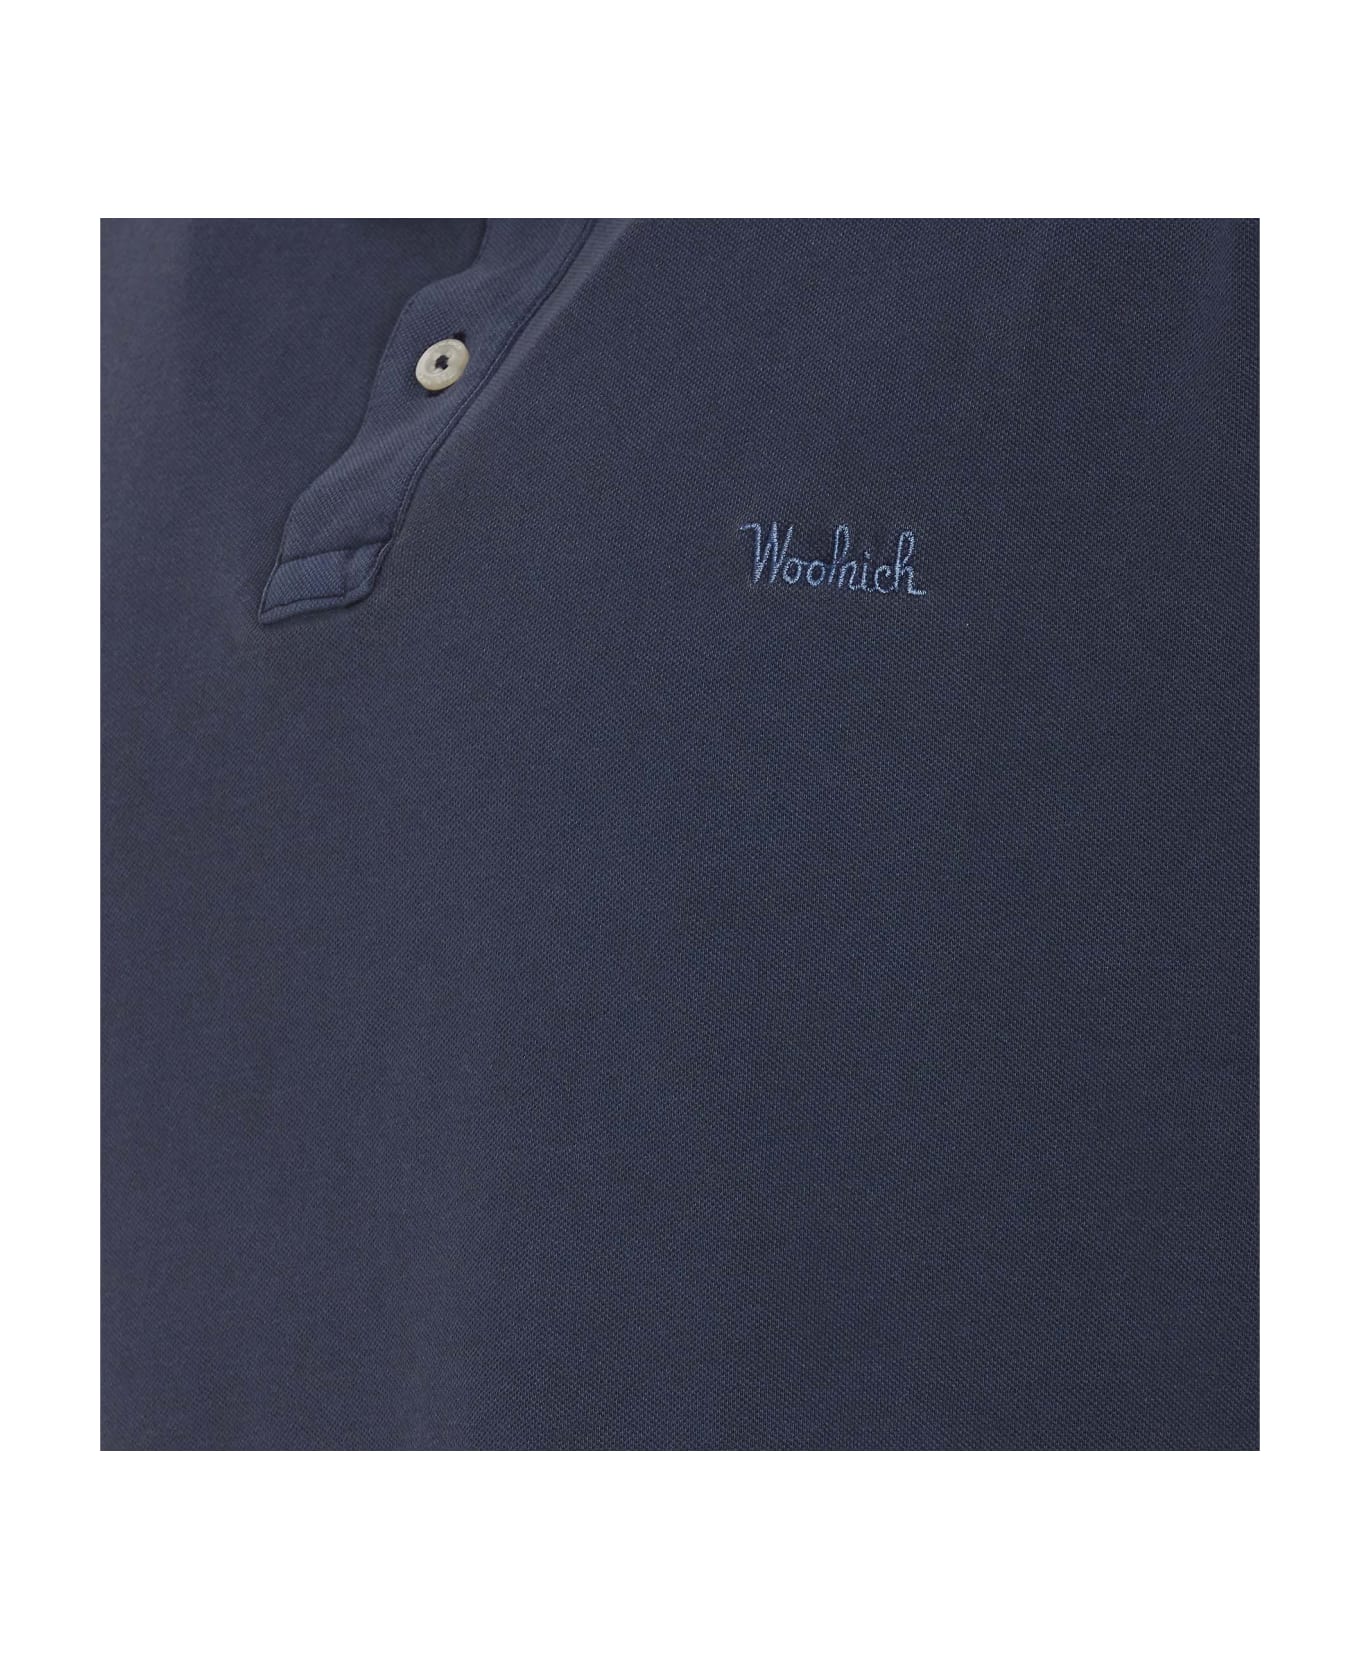 Woolrich Polo T-shirt - Melton Blue ポロシャツ